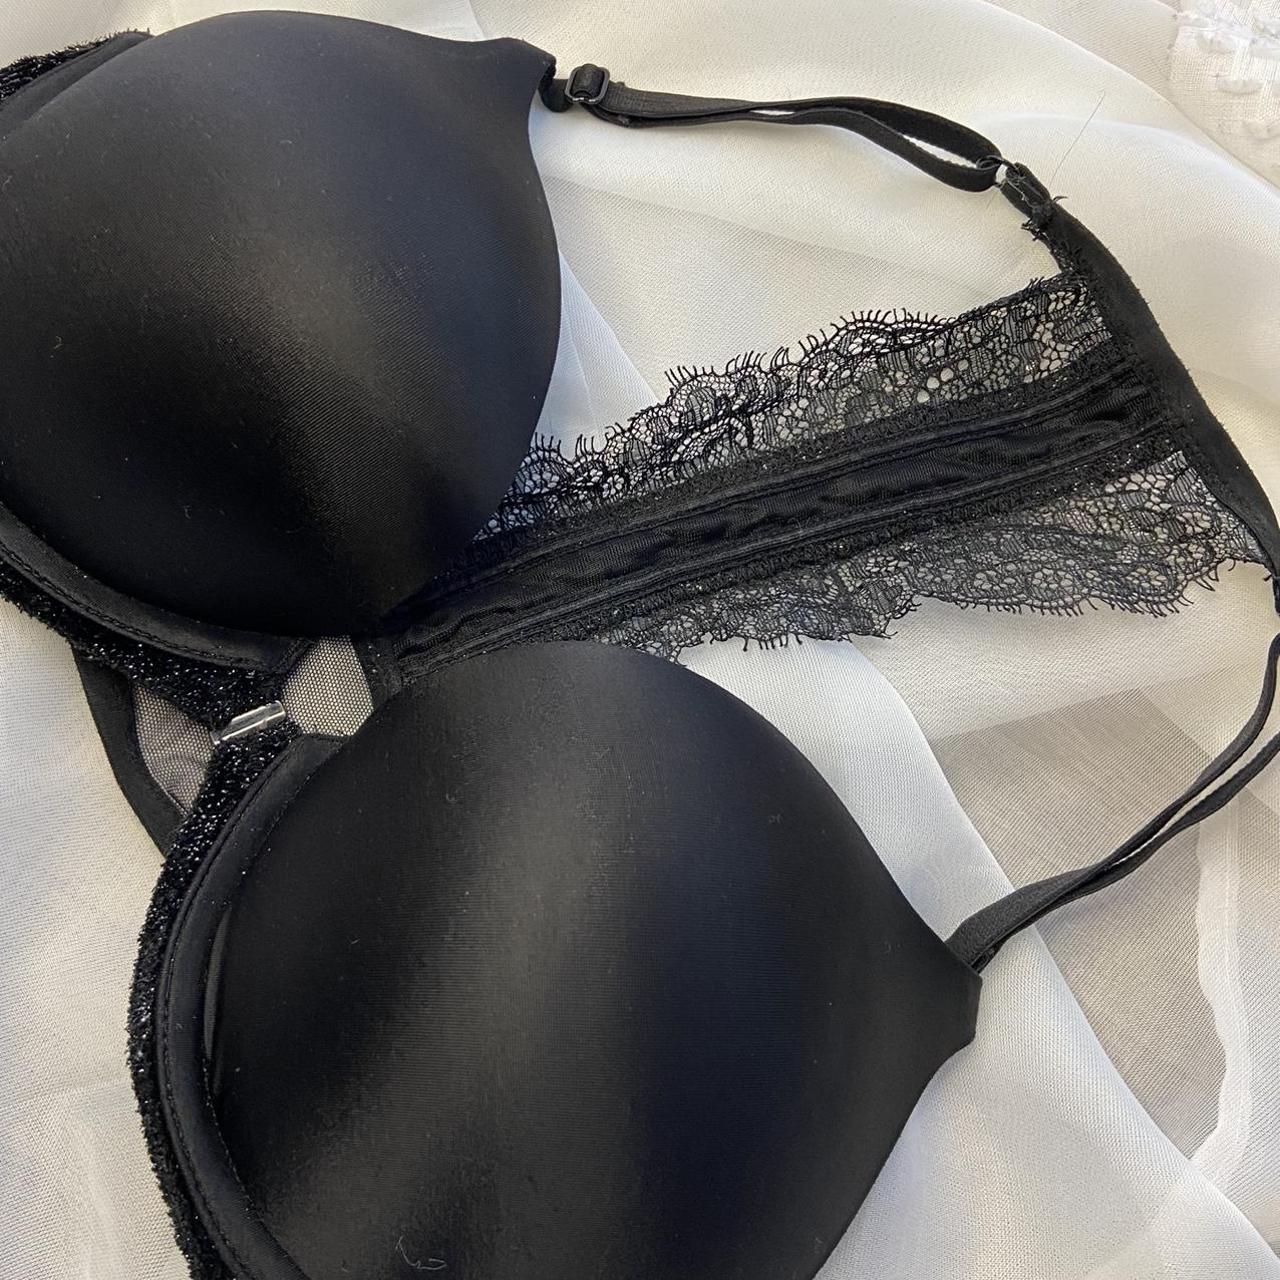 Victoria's Secret Bombshell Pushup Bra in Black Lace